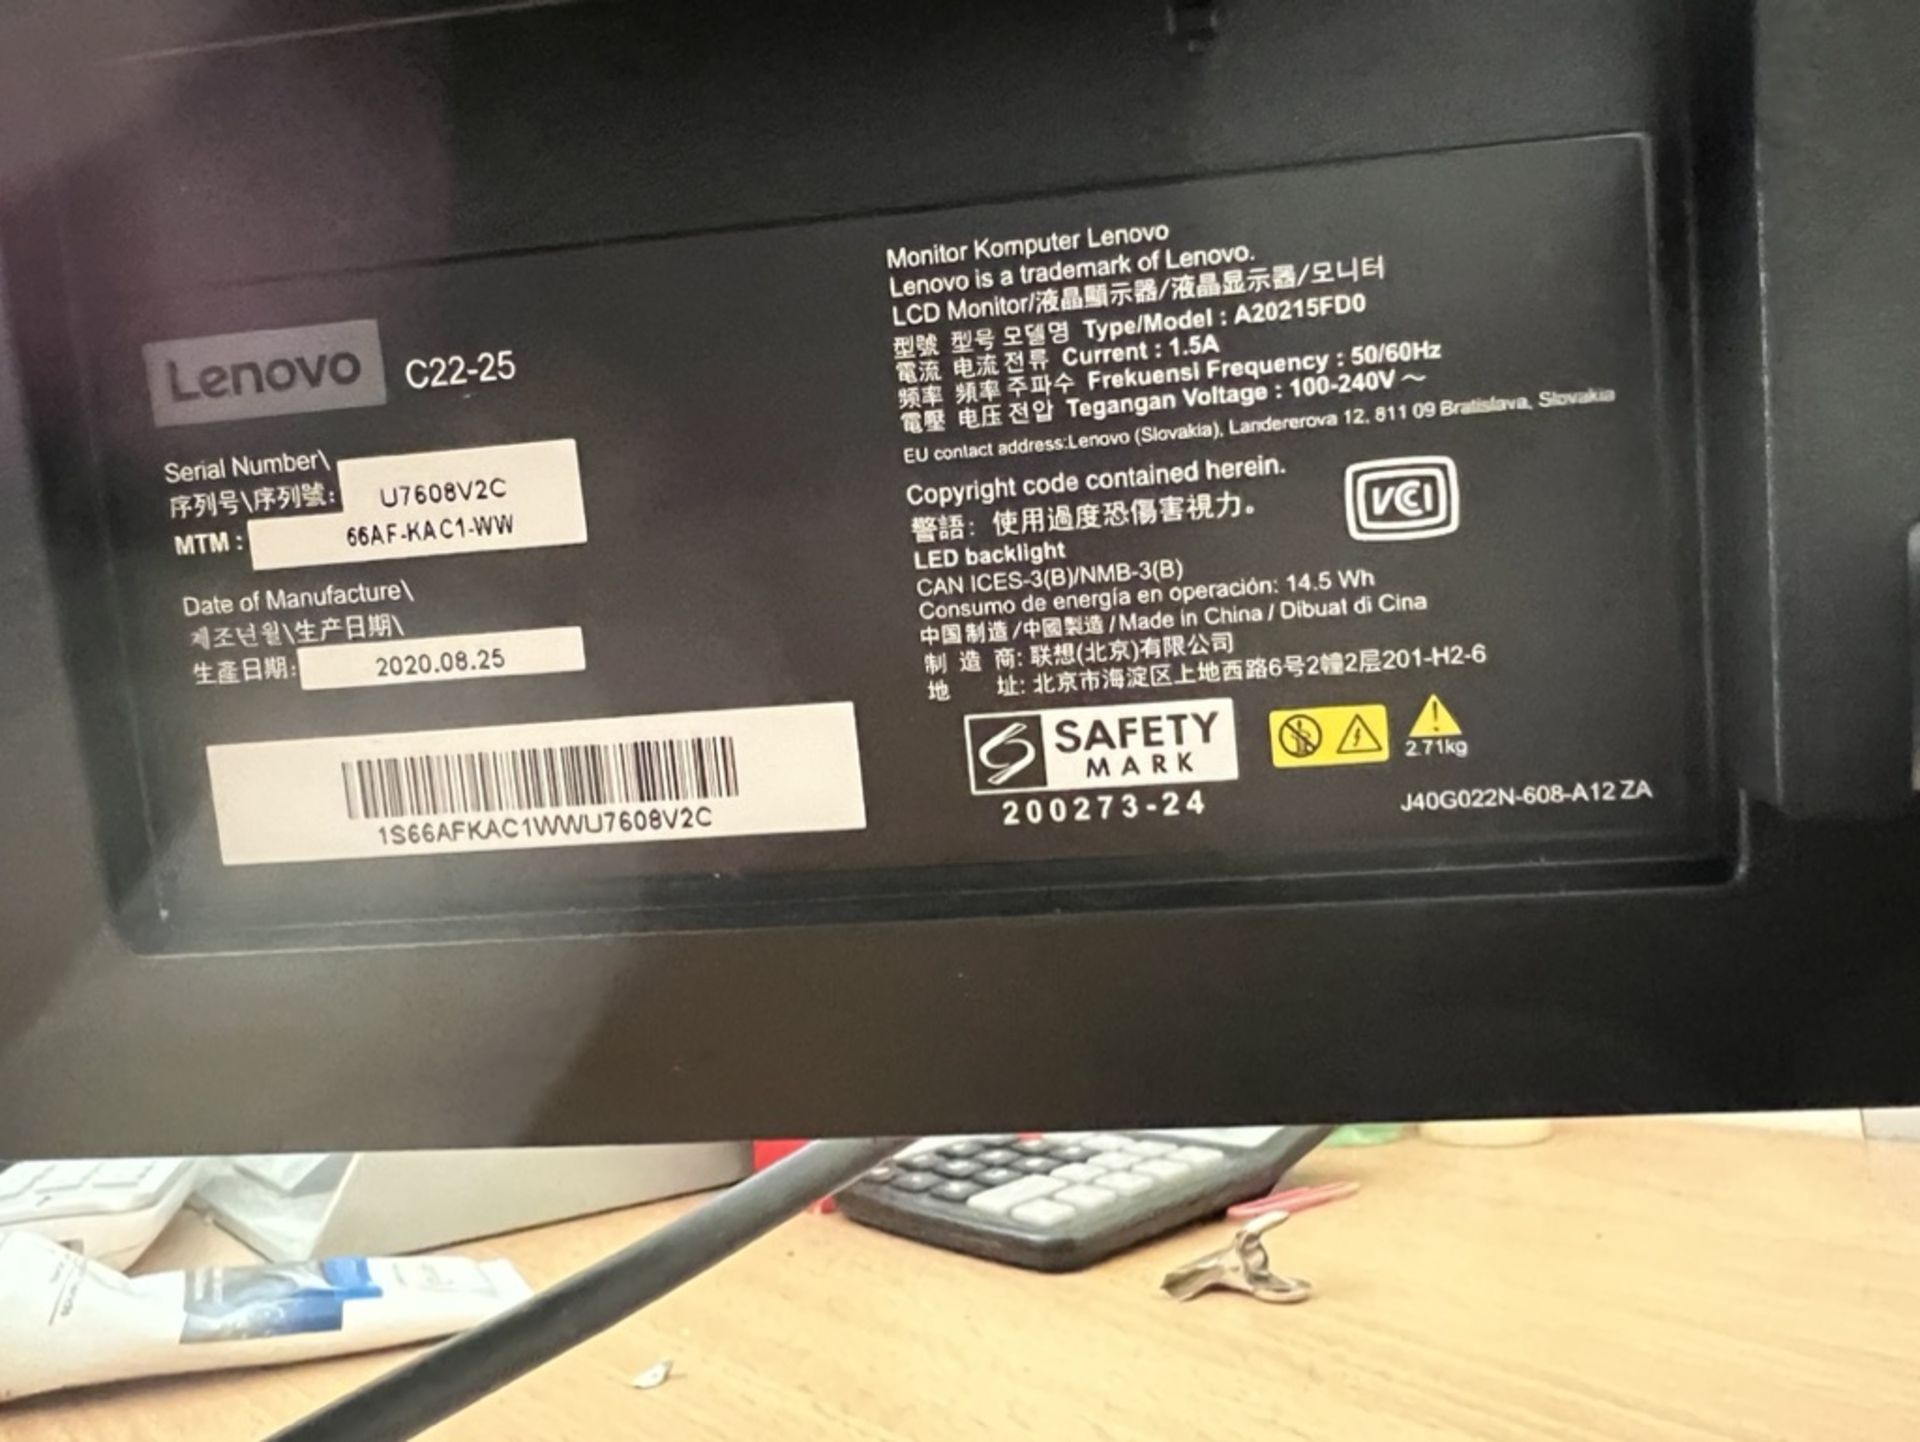 4 x Lenovo A20215FDO LED Monitors - Image 2 of 3